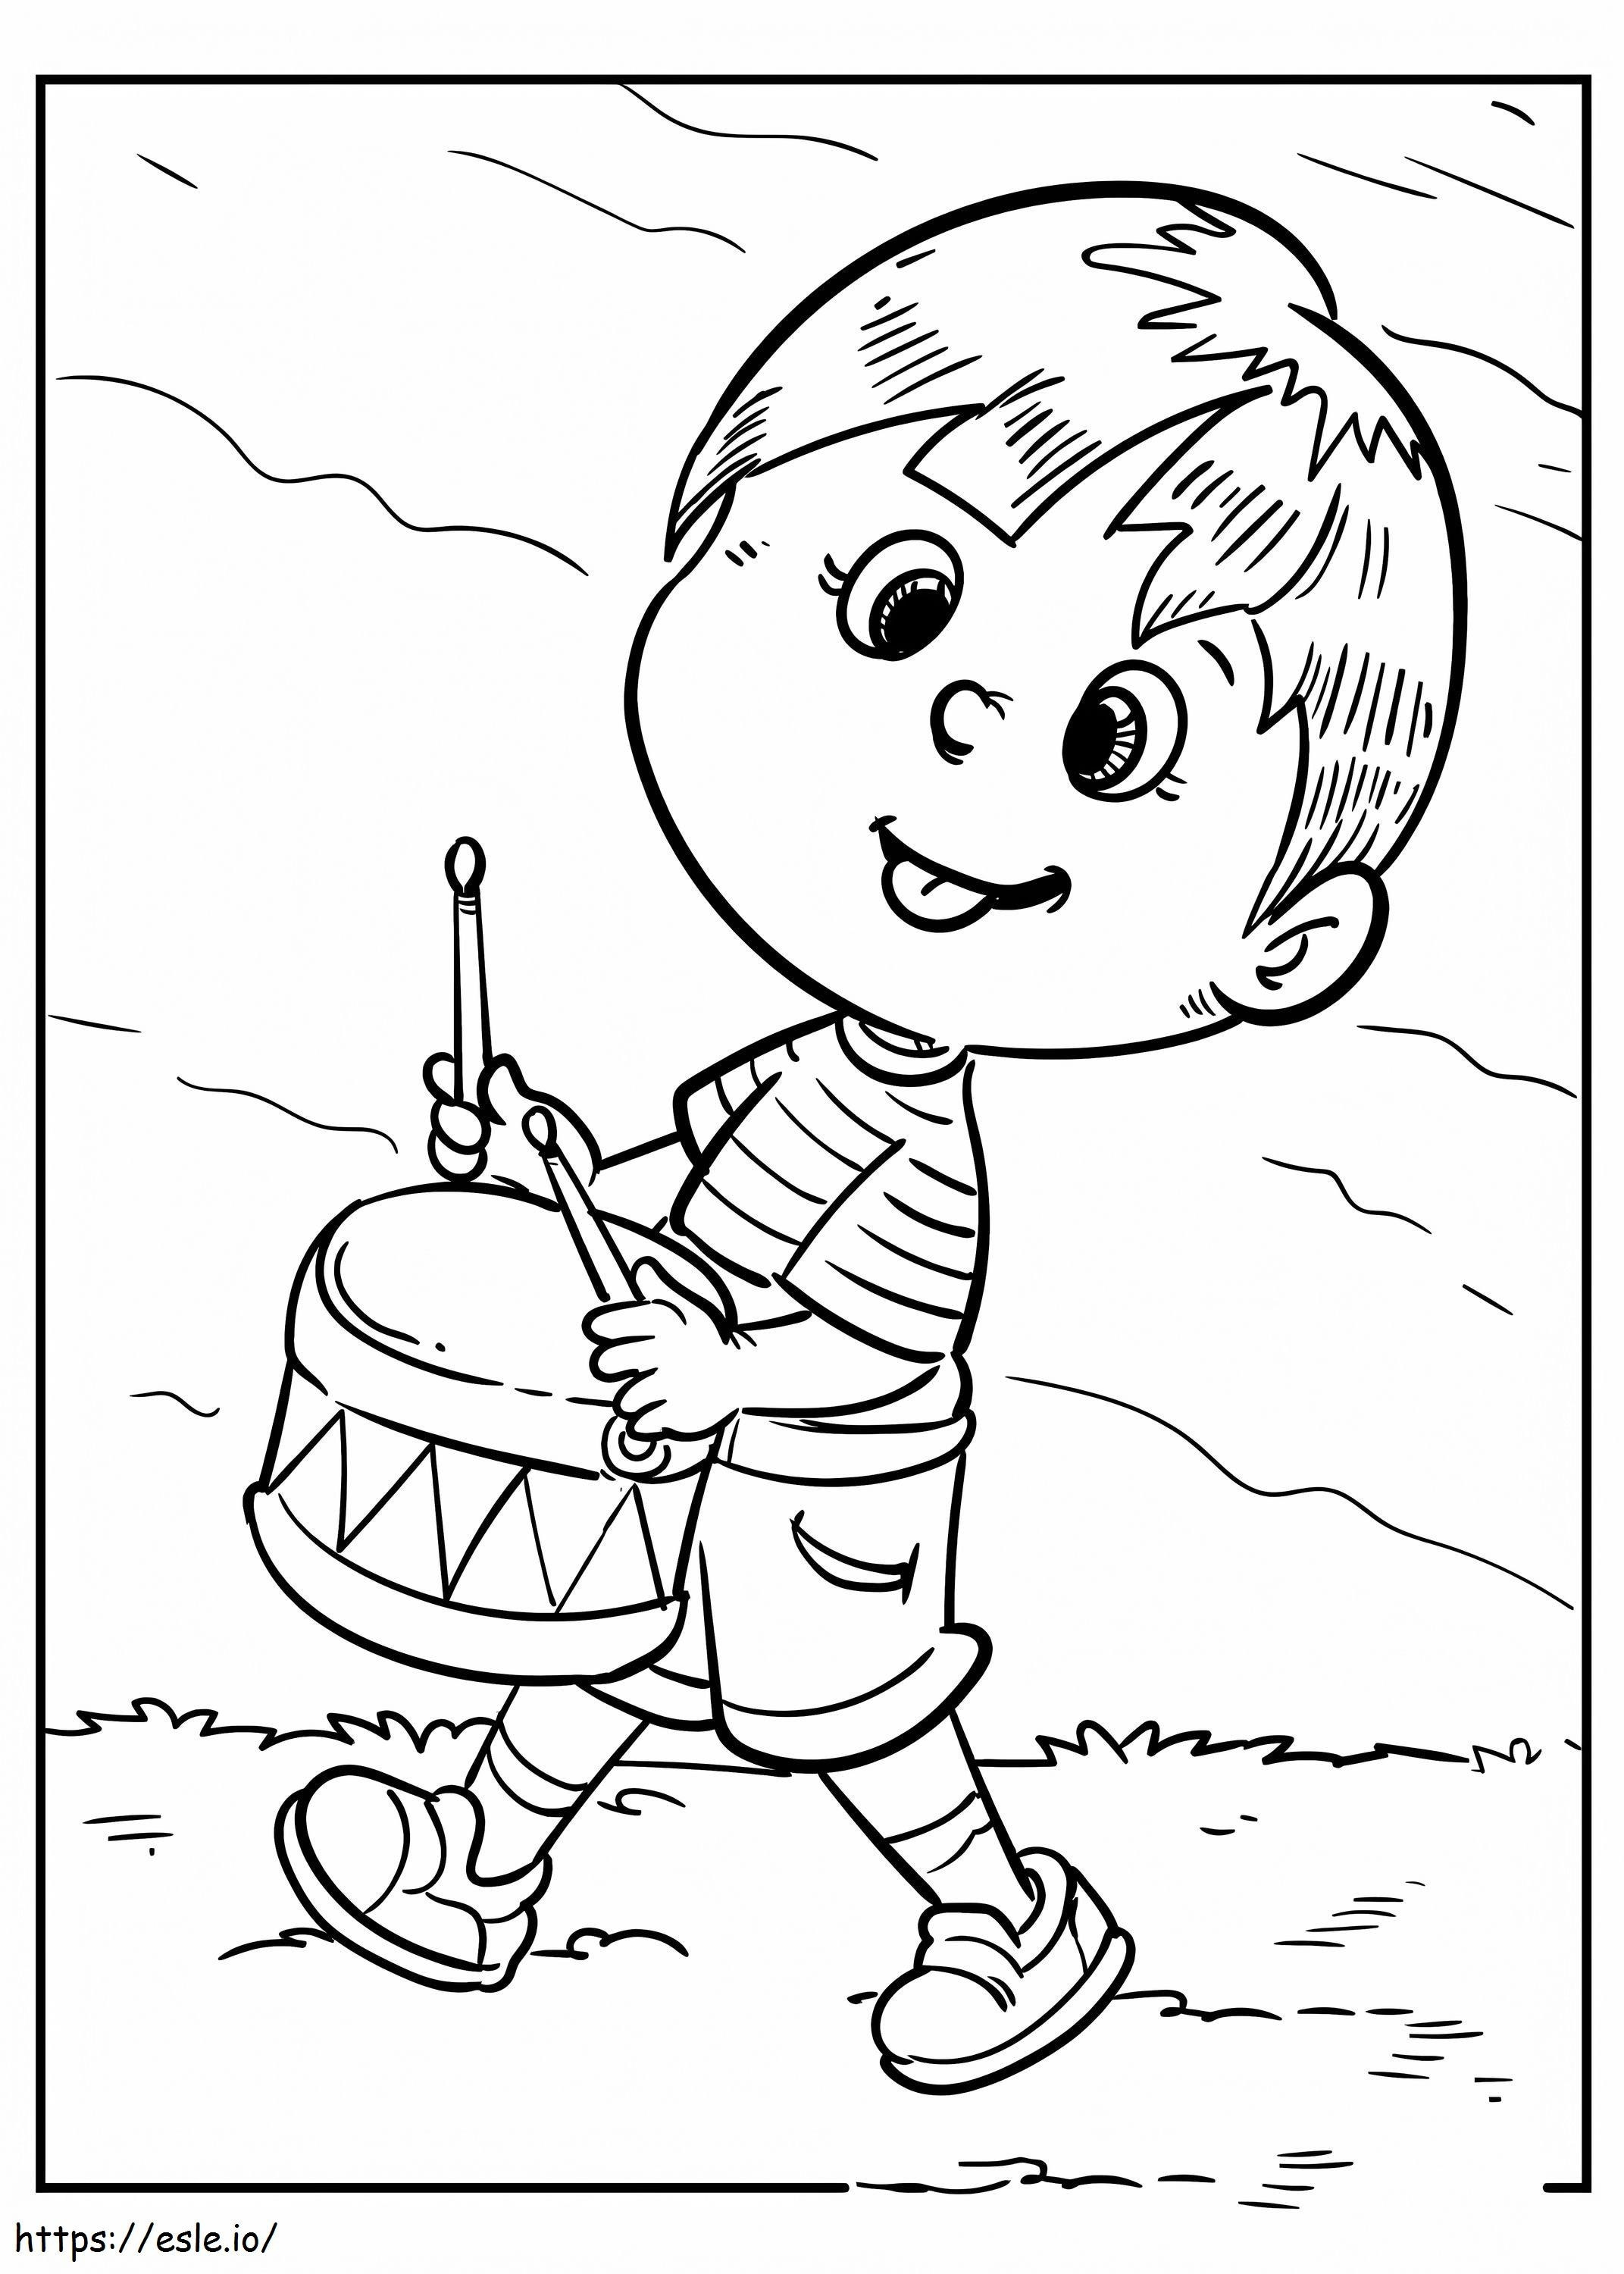 Menino tocando bateria para colorir